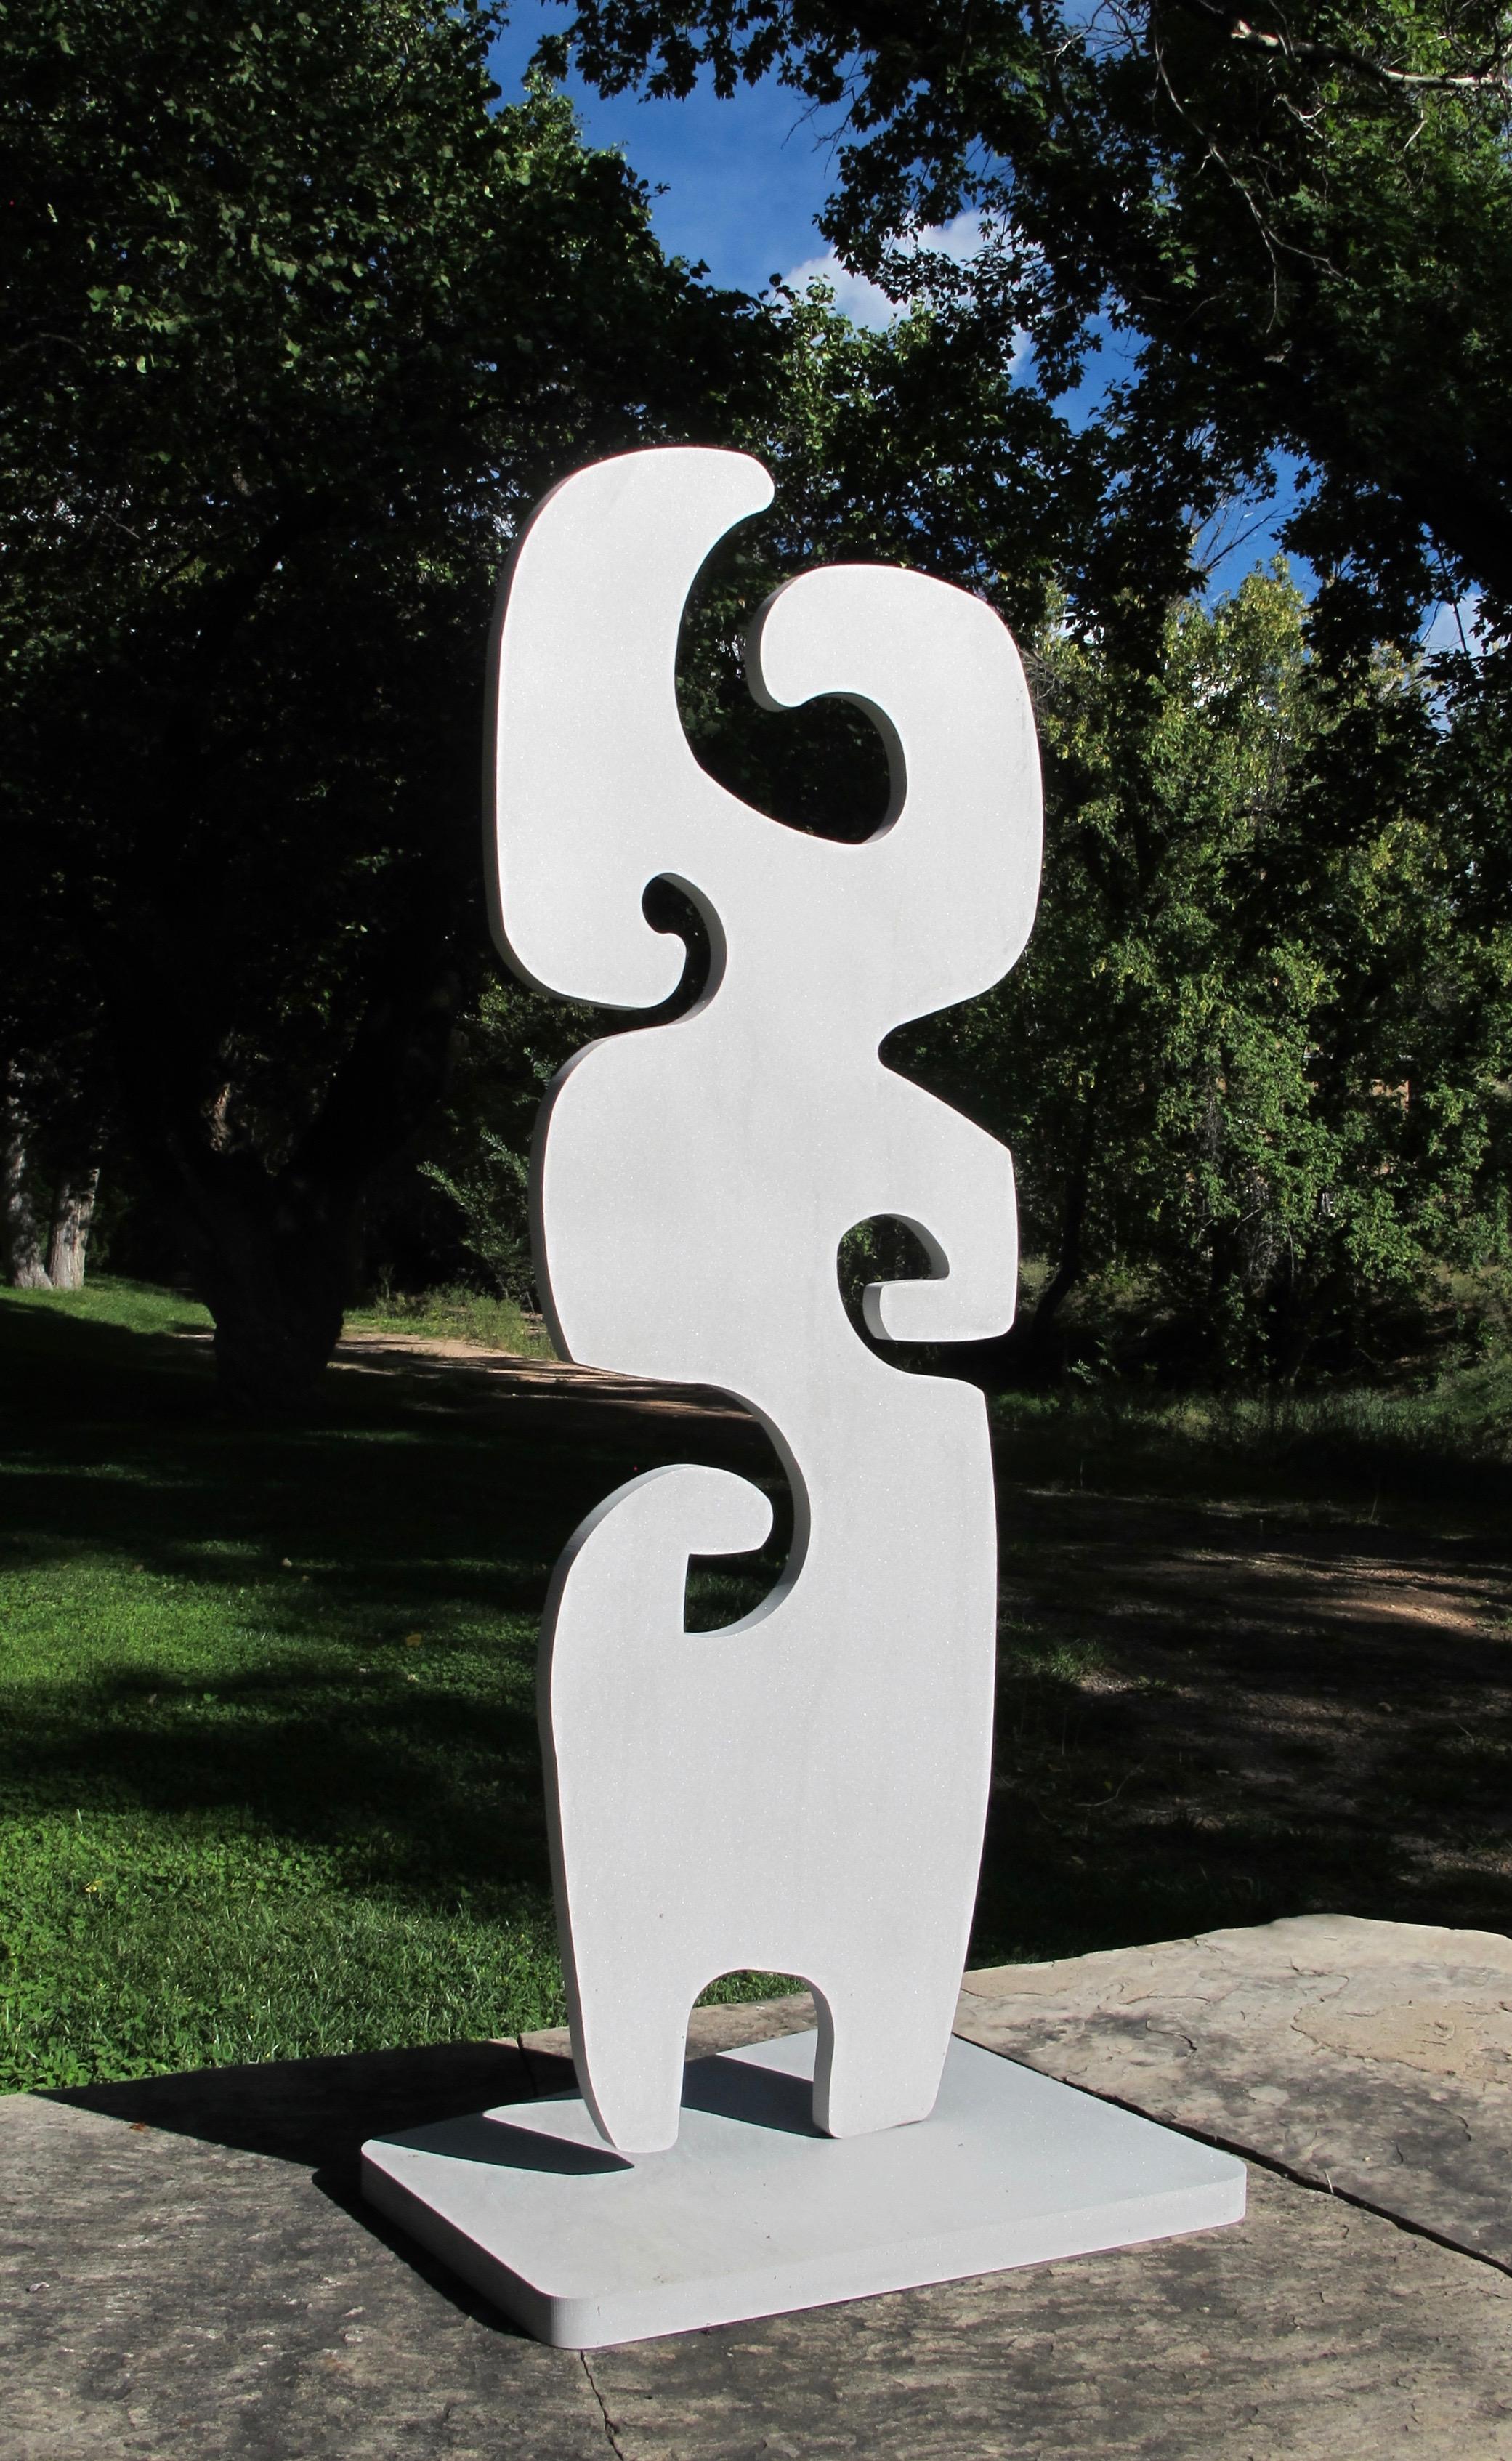 abstract figures sculpture